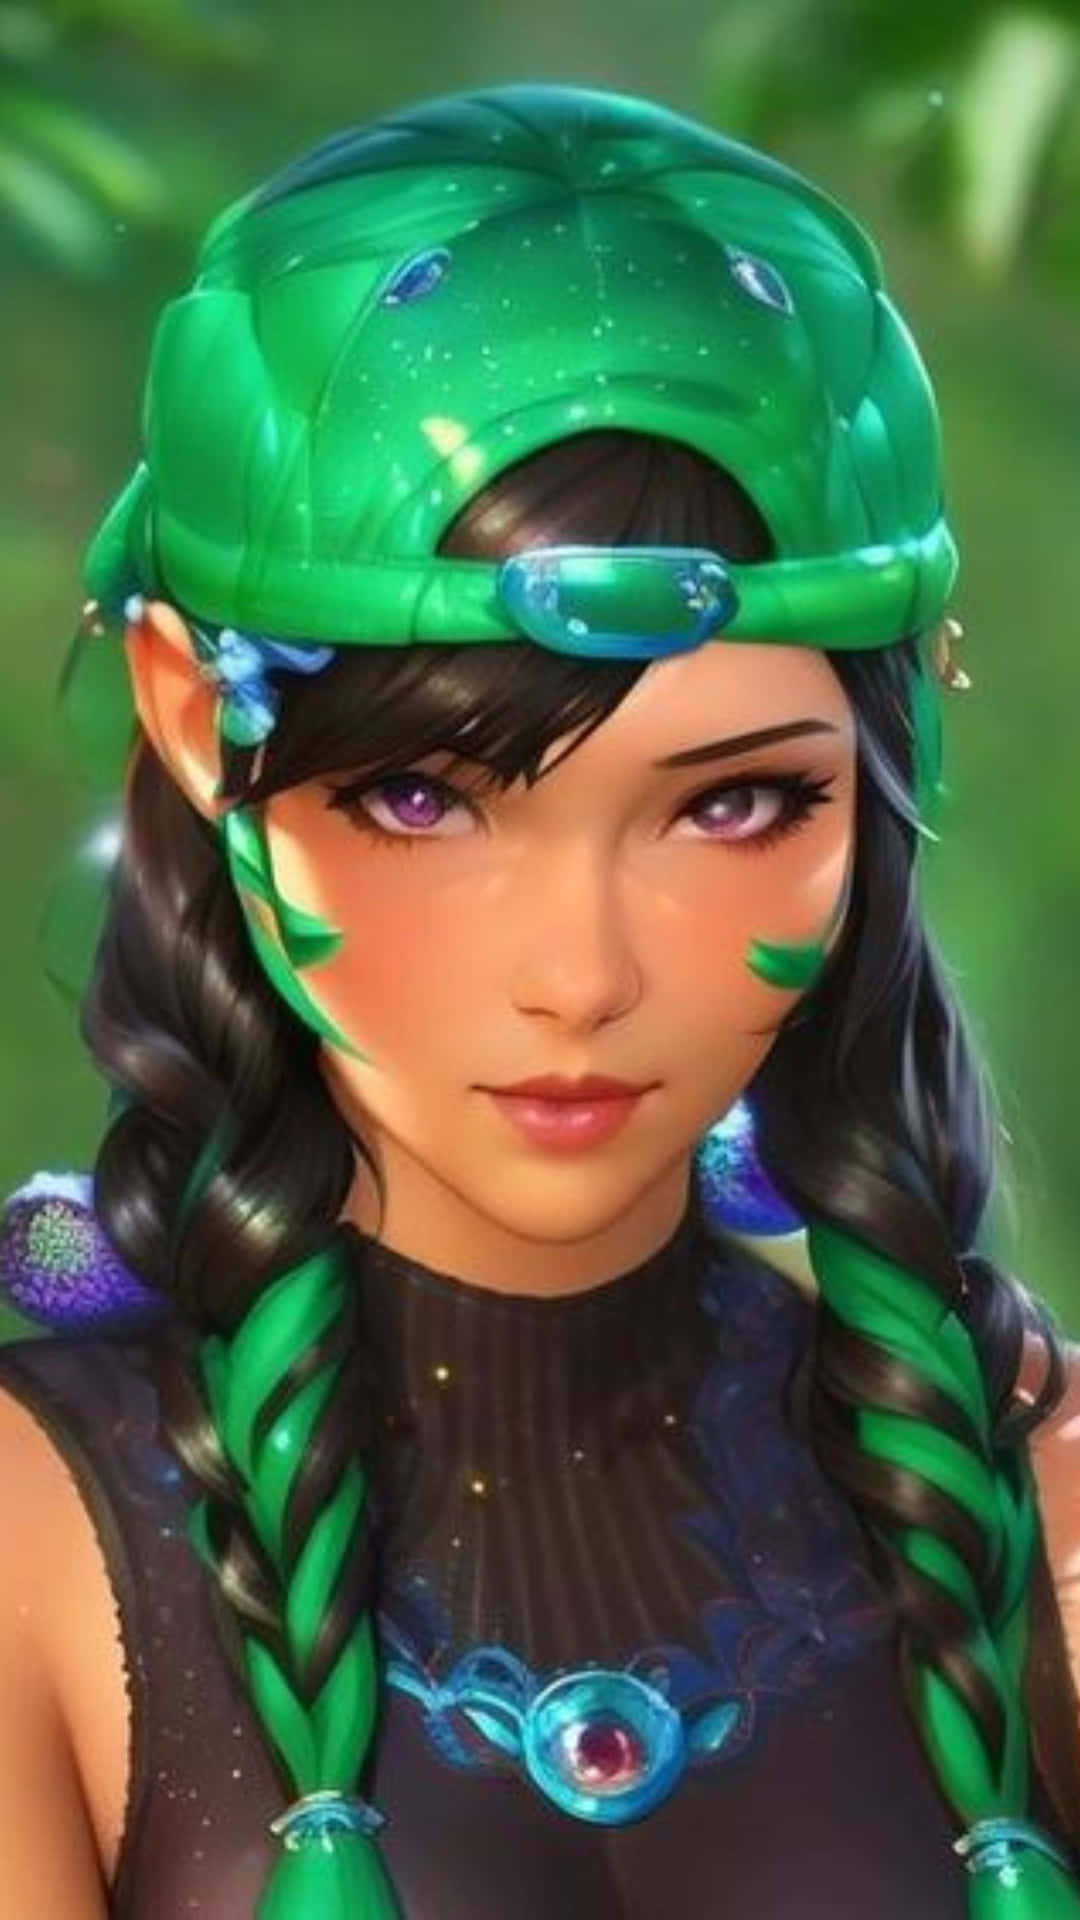 Enchanted Green Cap Girl Wallpaper